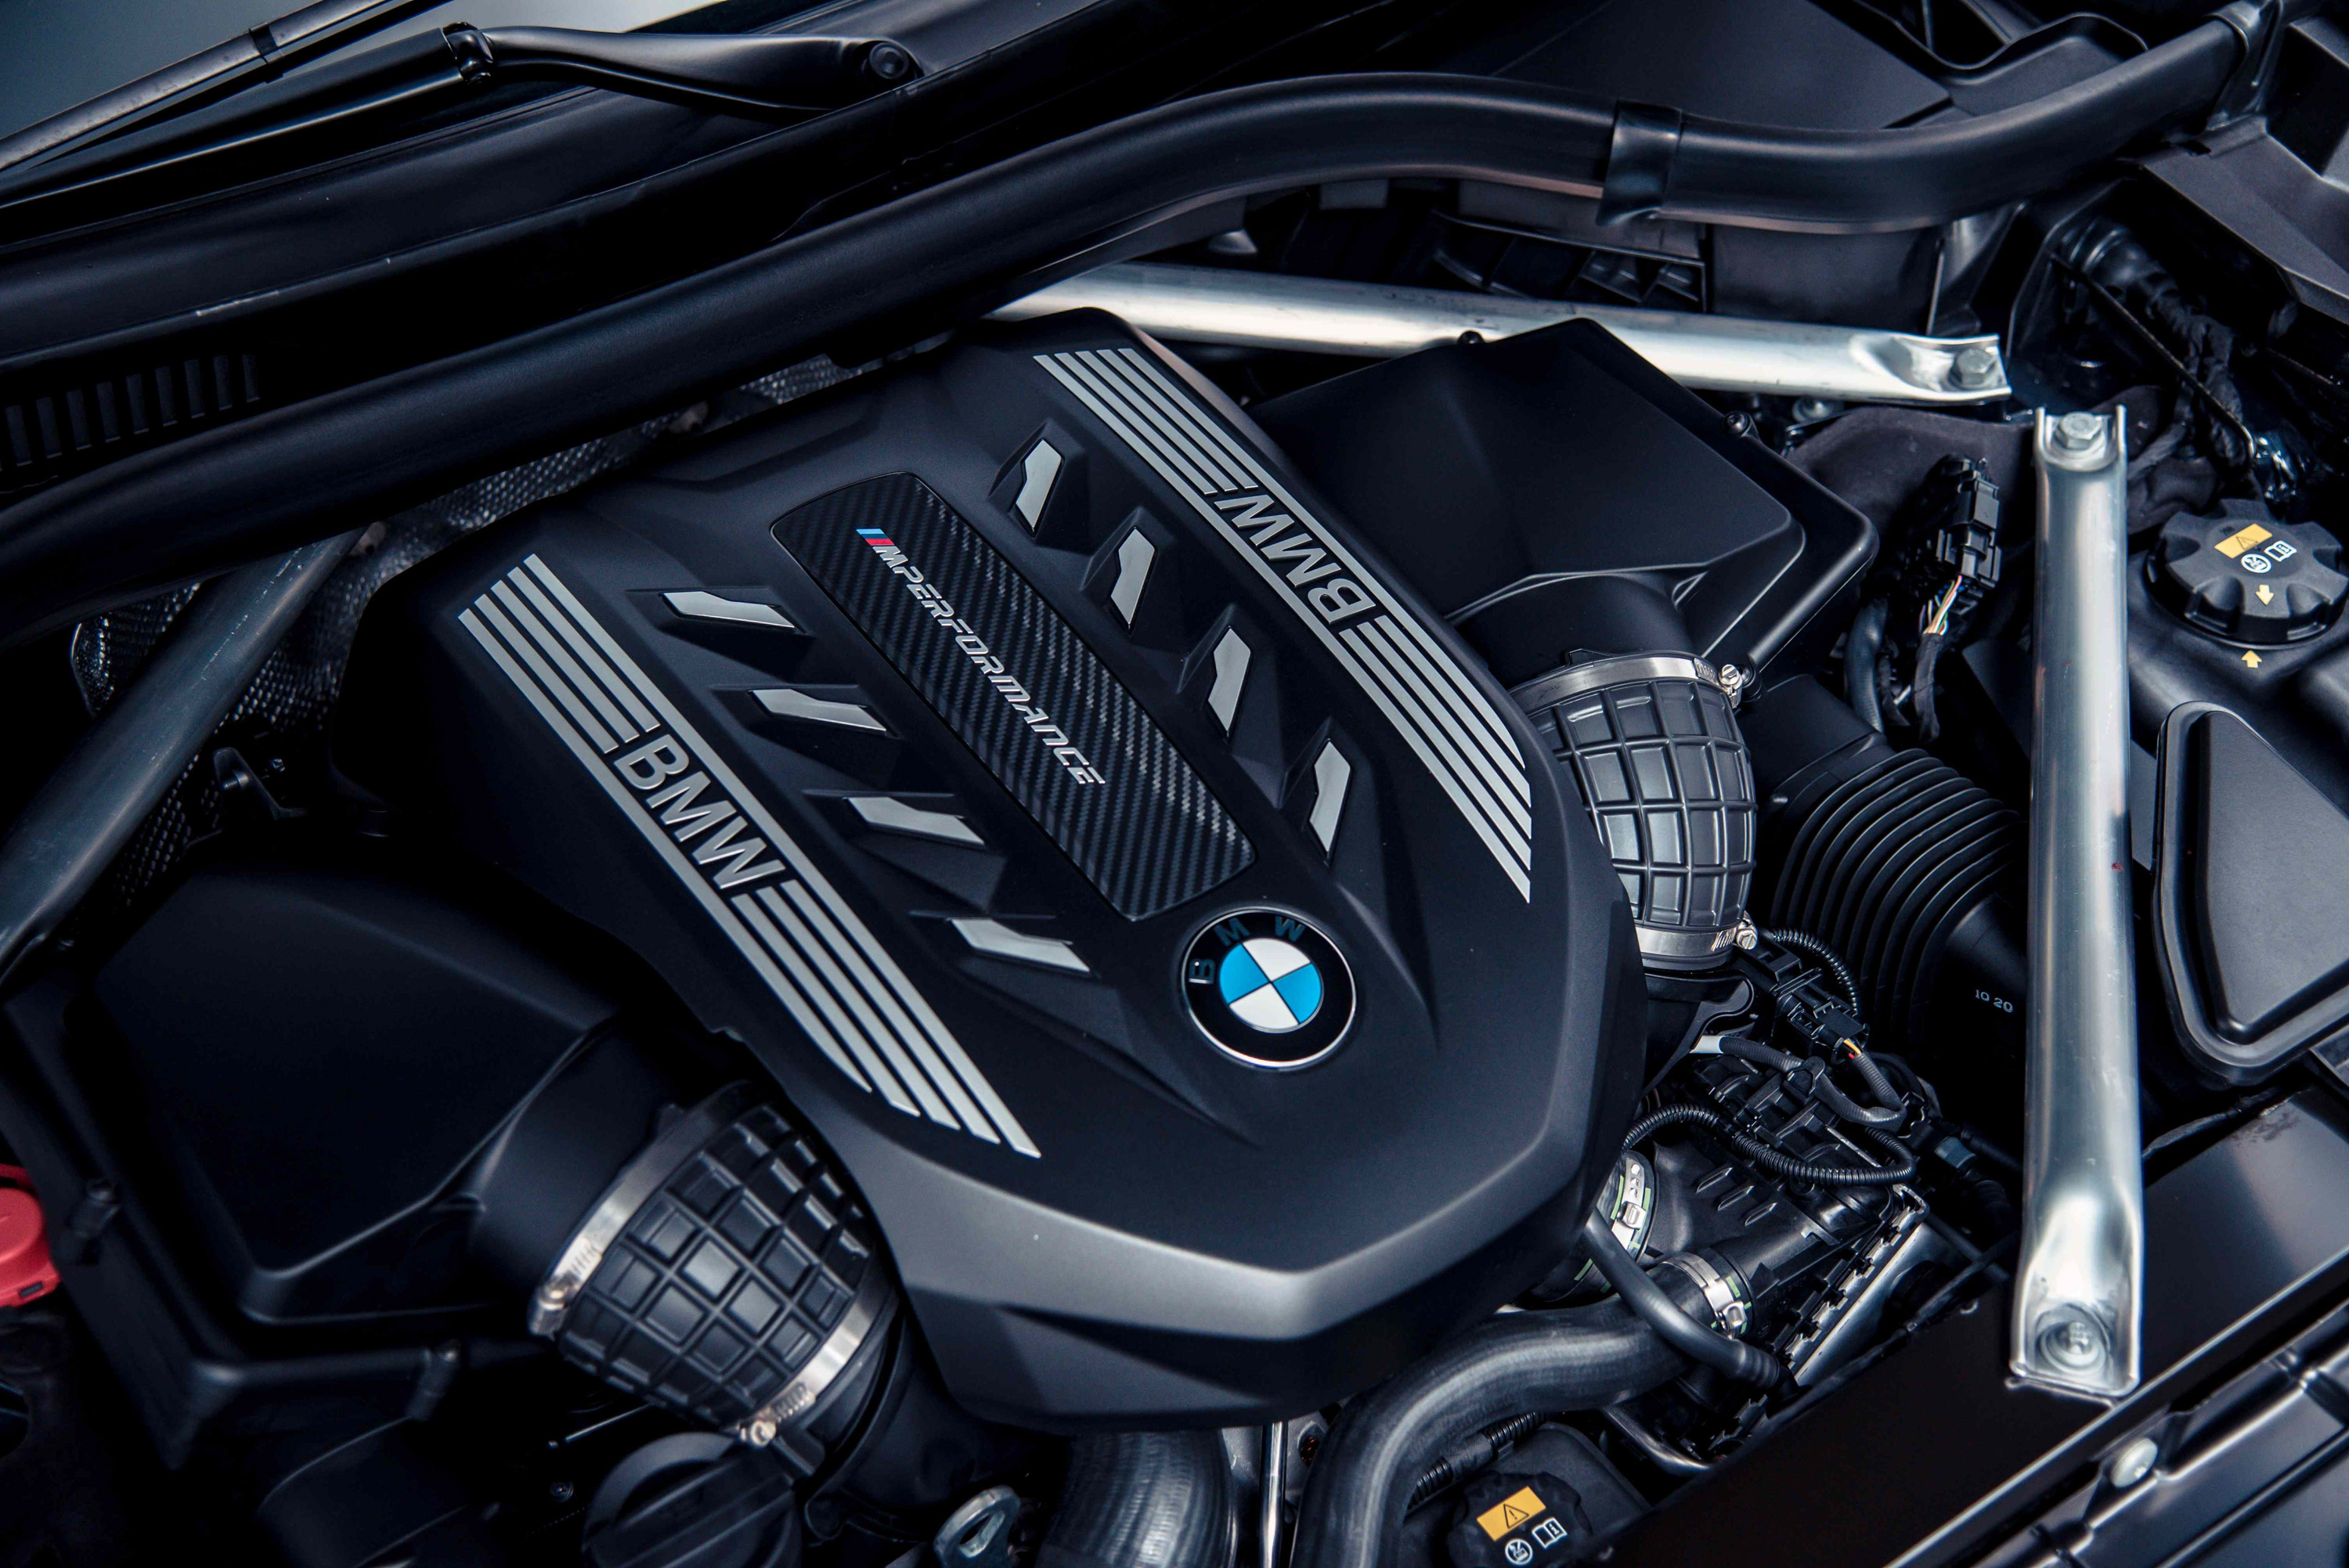 BMW M Performance TwinPower Turbo N63 4.4 升 V 型 8 汽缸雙渦輪雙渦流汽油引擎，最大馬力達 530 匹德制馬力與 750 牛頓米的扭力輸出。